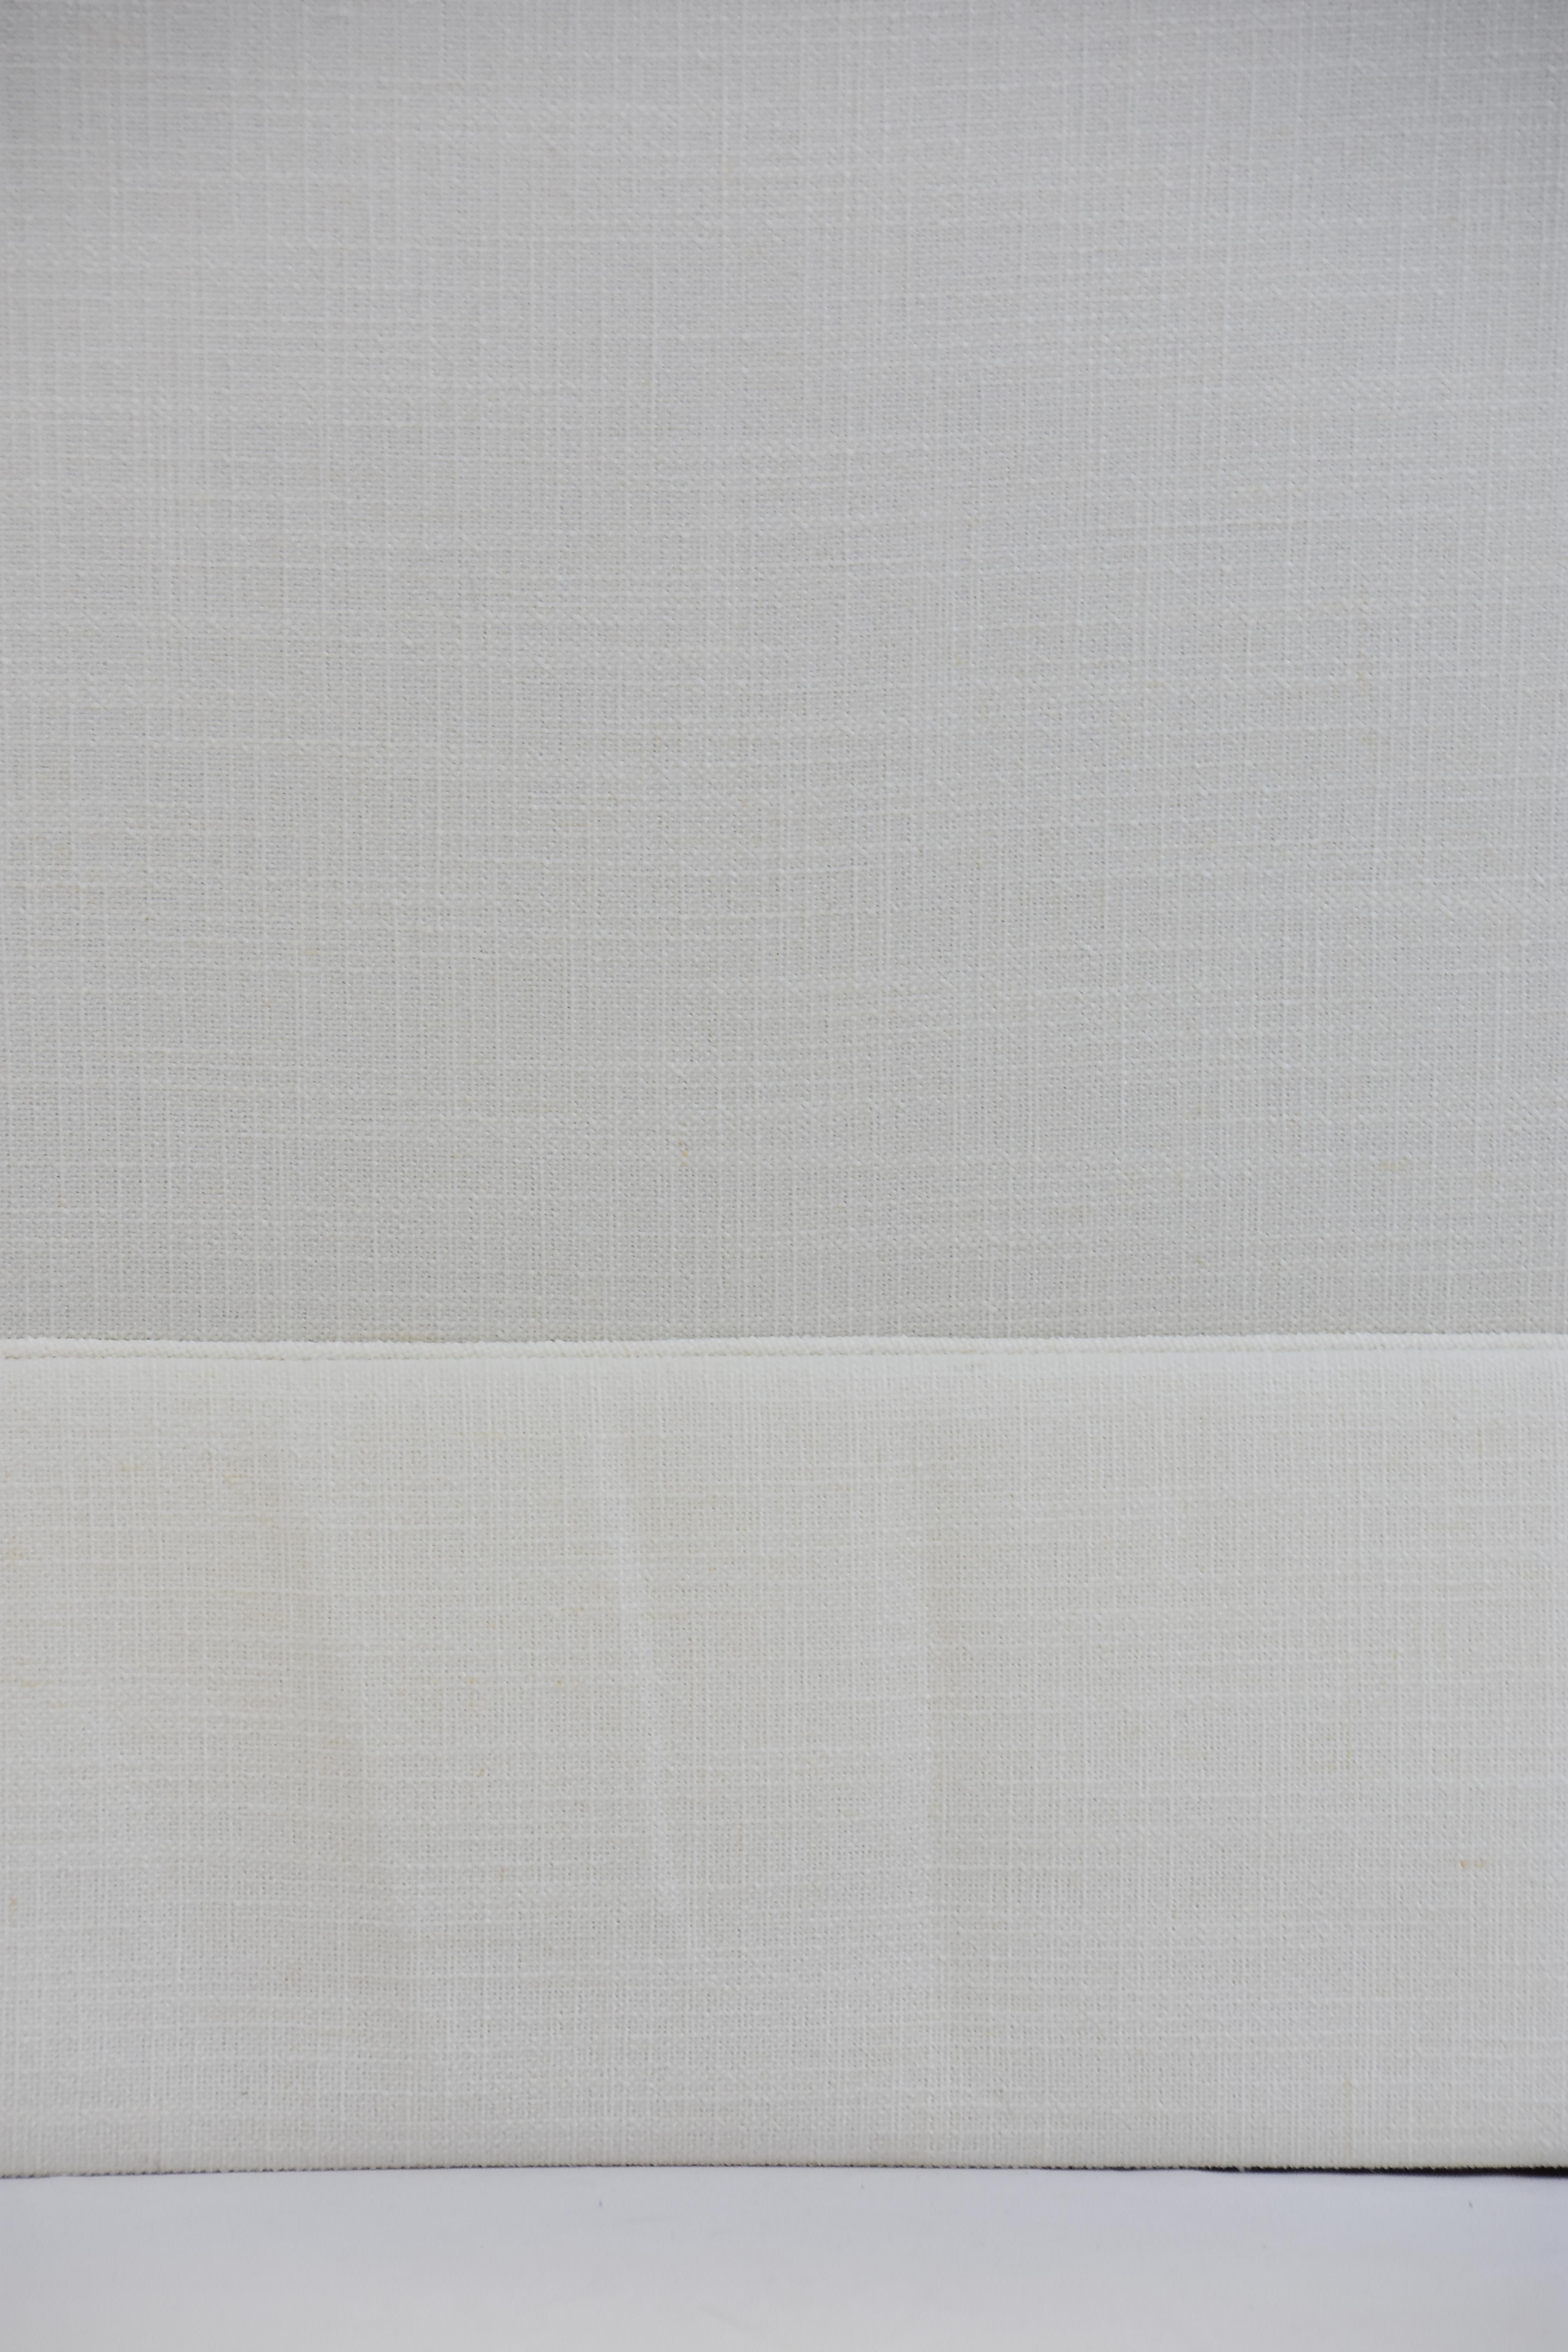 Le Jeune Upholstery Lucca Sofa Showroom Model in White Linen 6